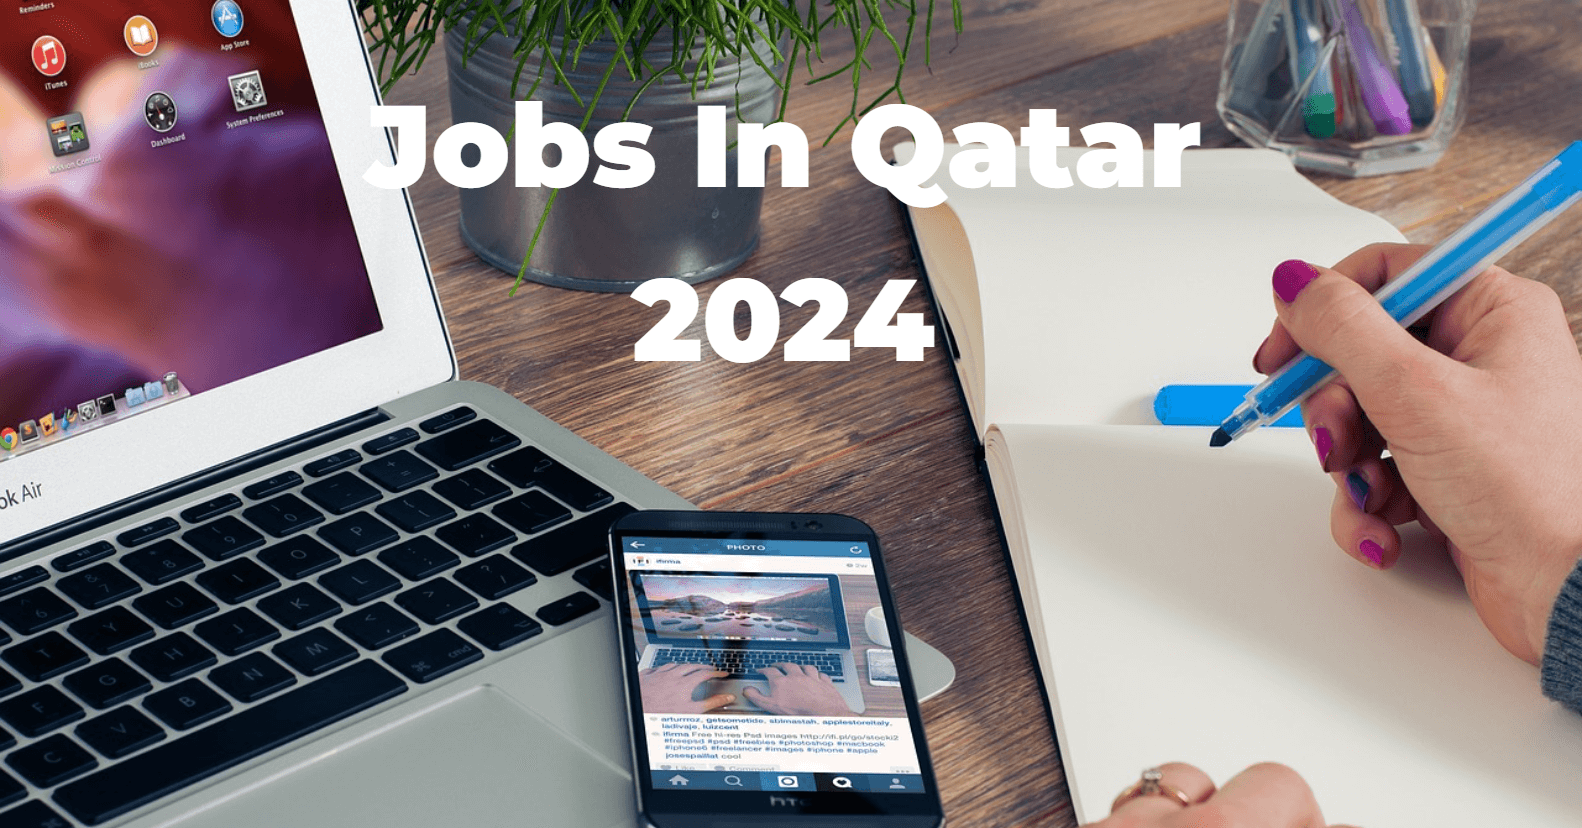 Latest Jobs in Qatar 2024